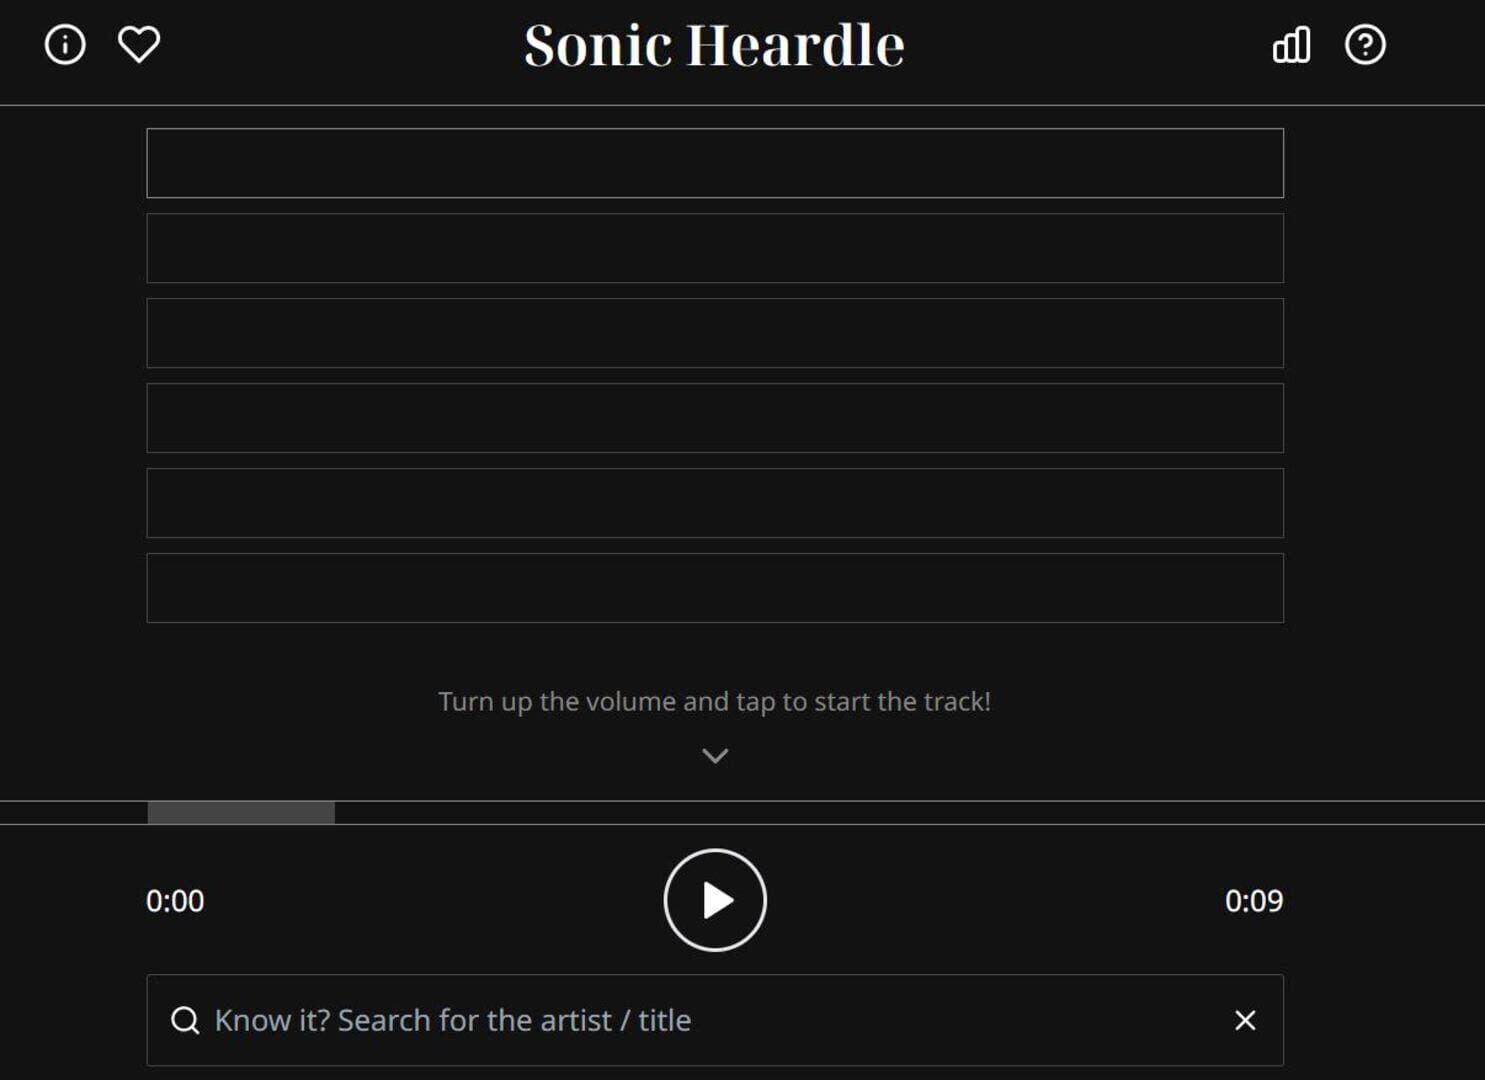 Sonic Heardle